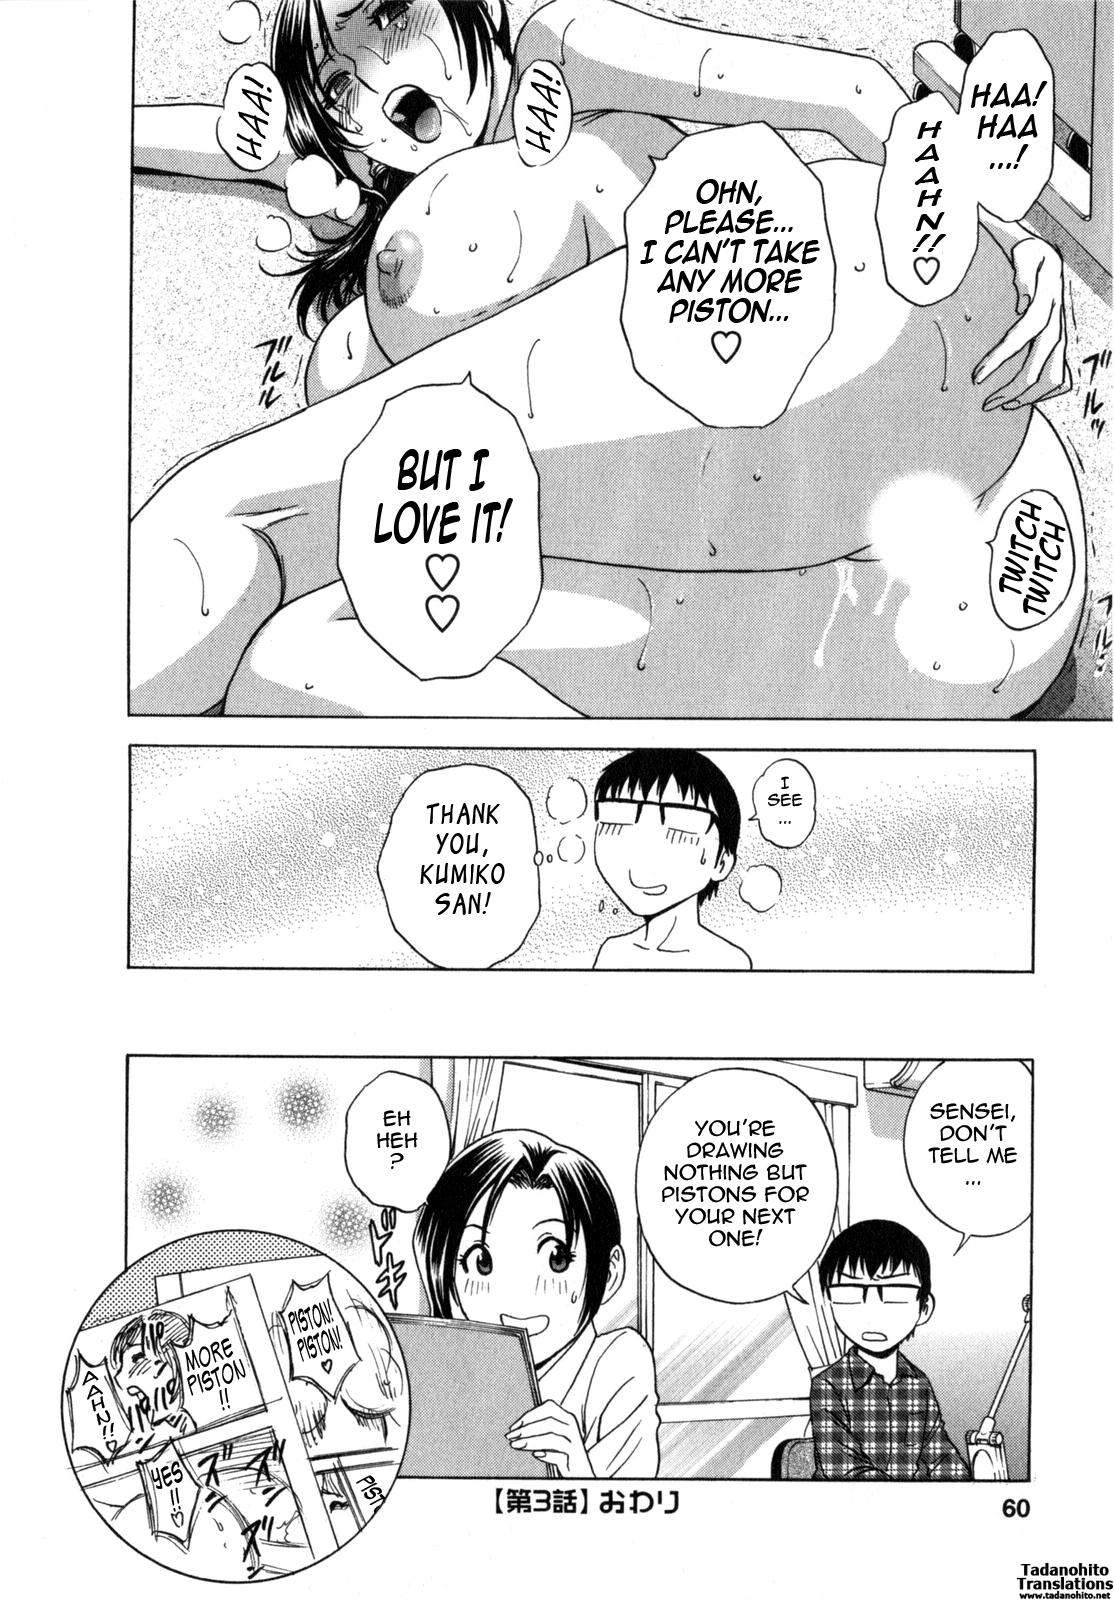 [Hidemaru] Life with Married Women Just Like a Manga 1 - Ch. 1-4 [English] {Tadanohito} 62